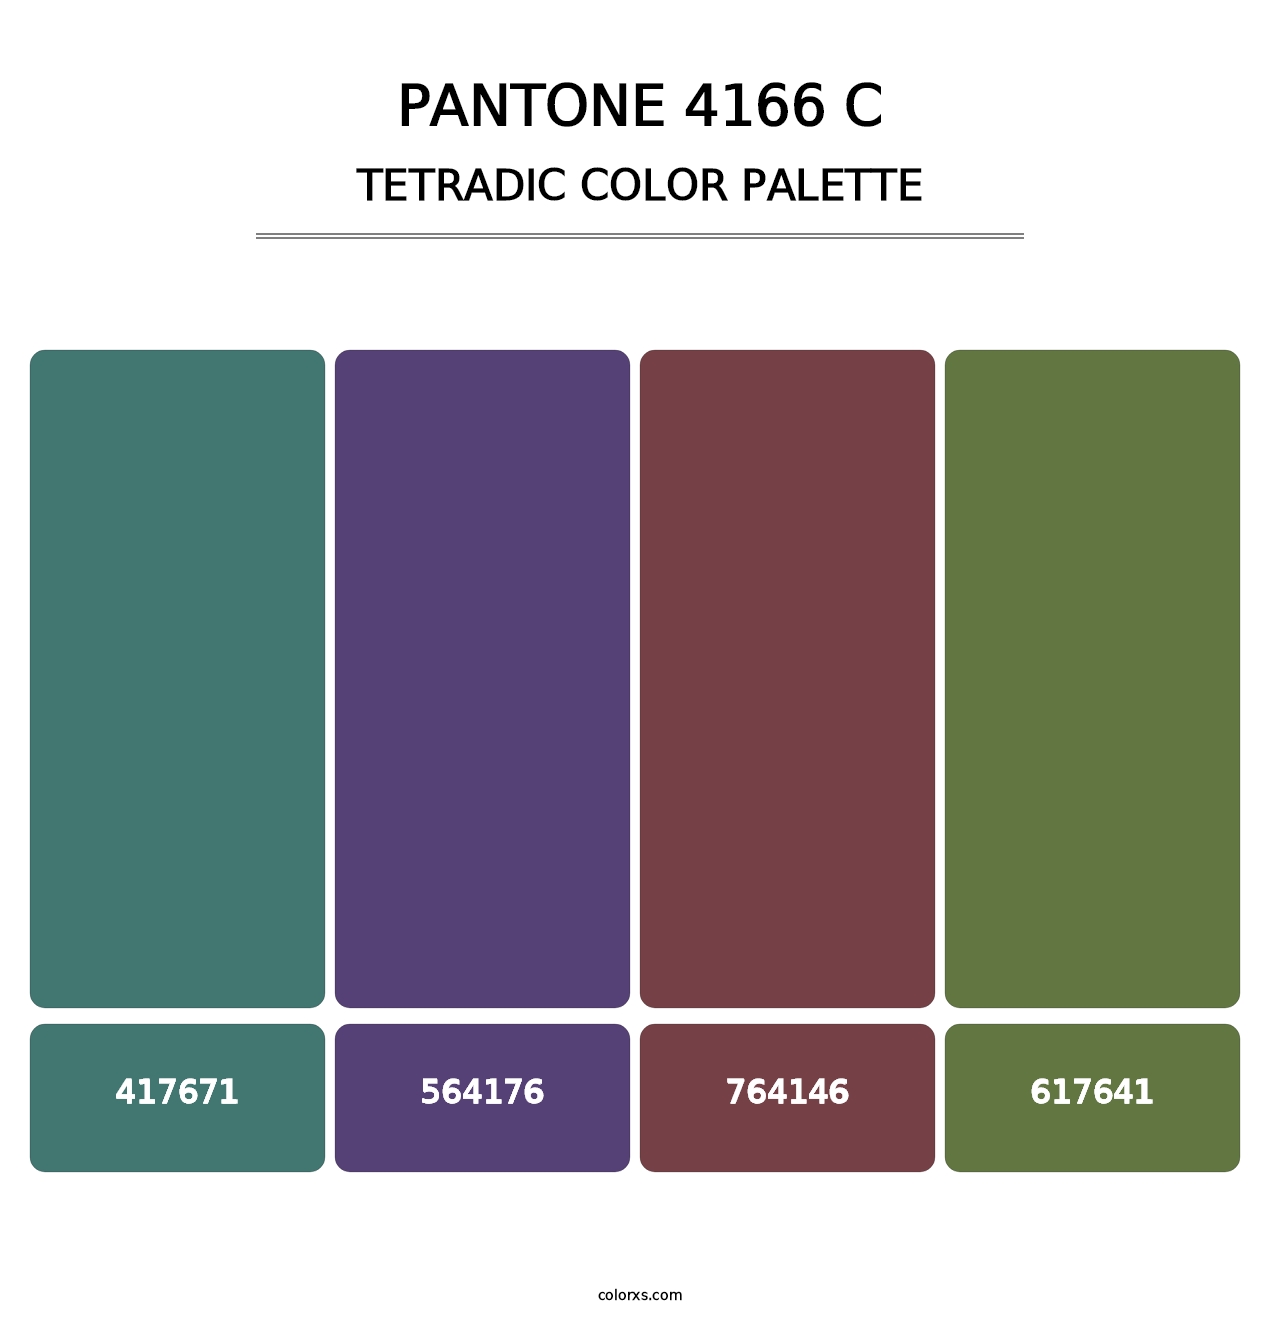 PANTONE 4166 C - Tetradic Color Palette